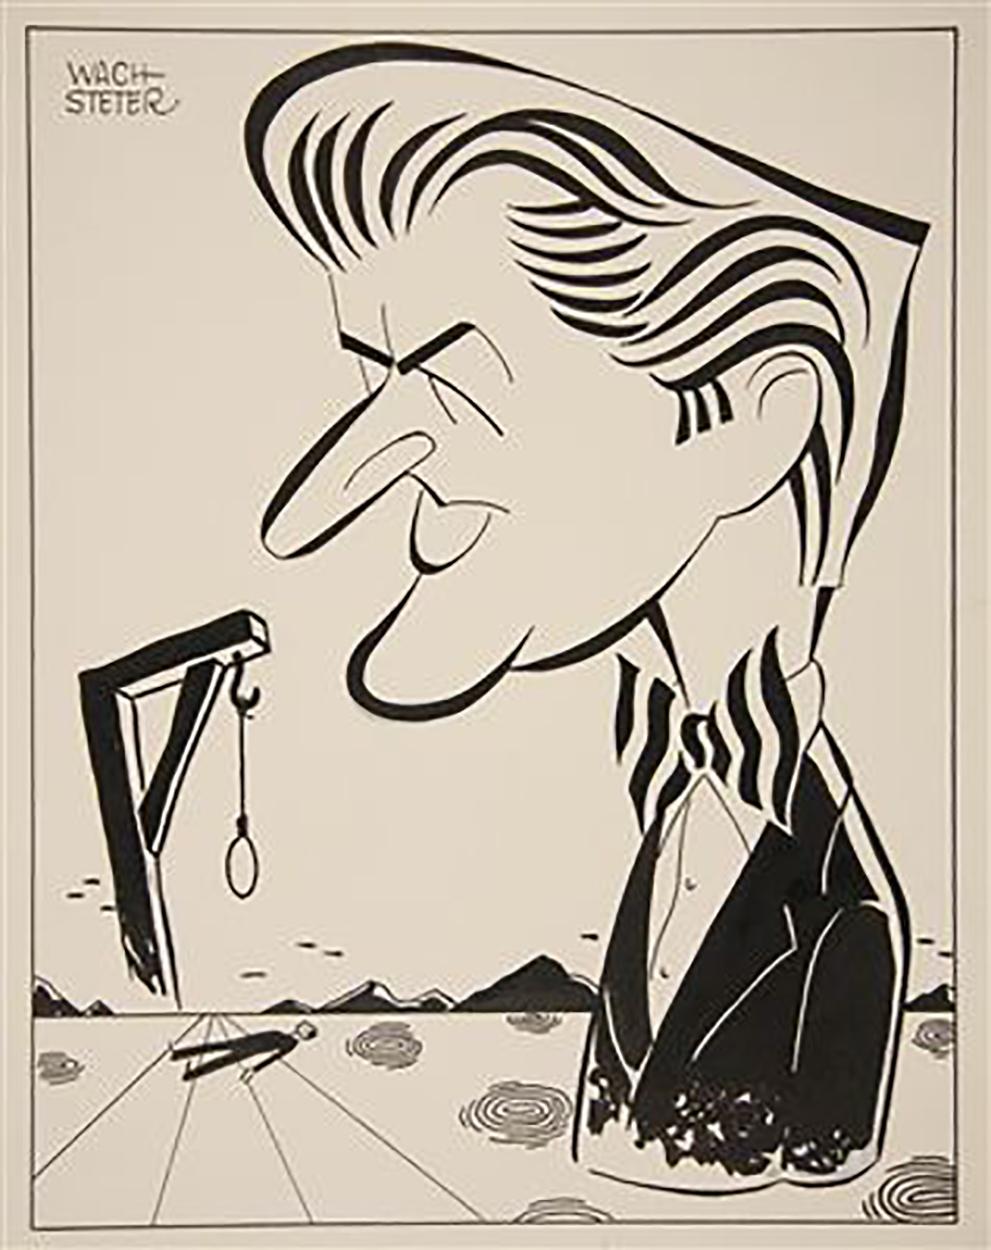 George Wachsteter Portrait - Caricature for Jay Jostin from "Mr. District Attorney"